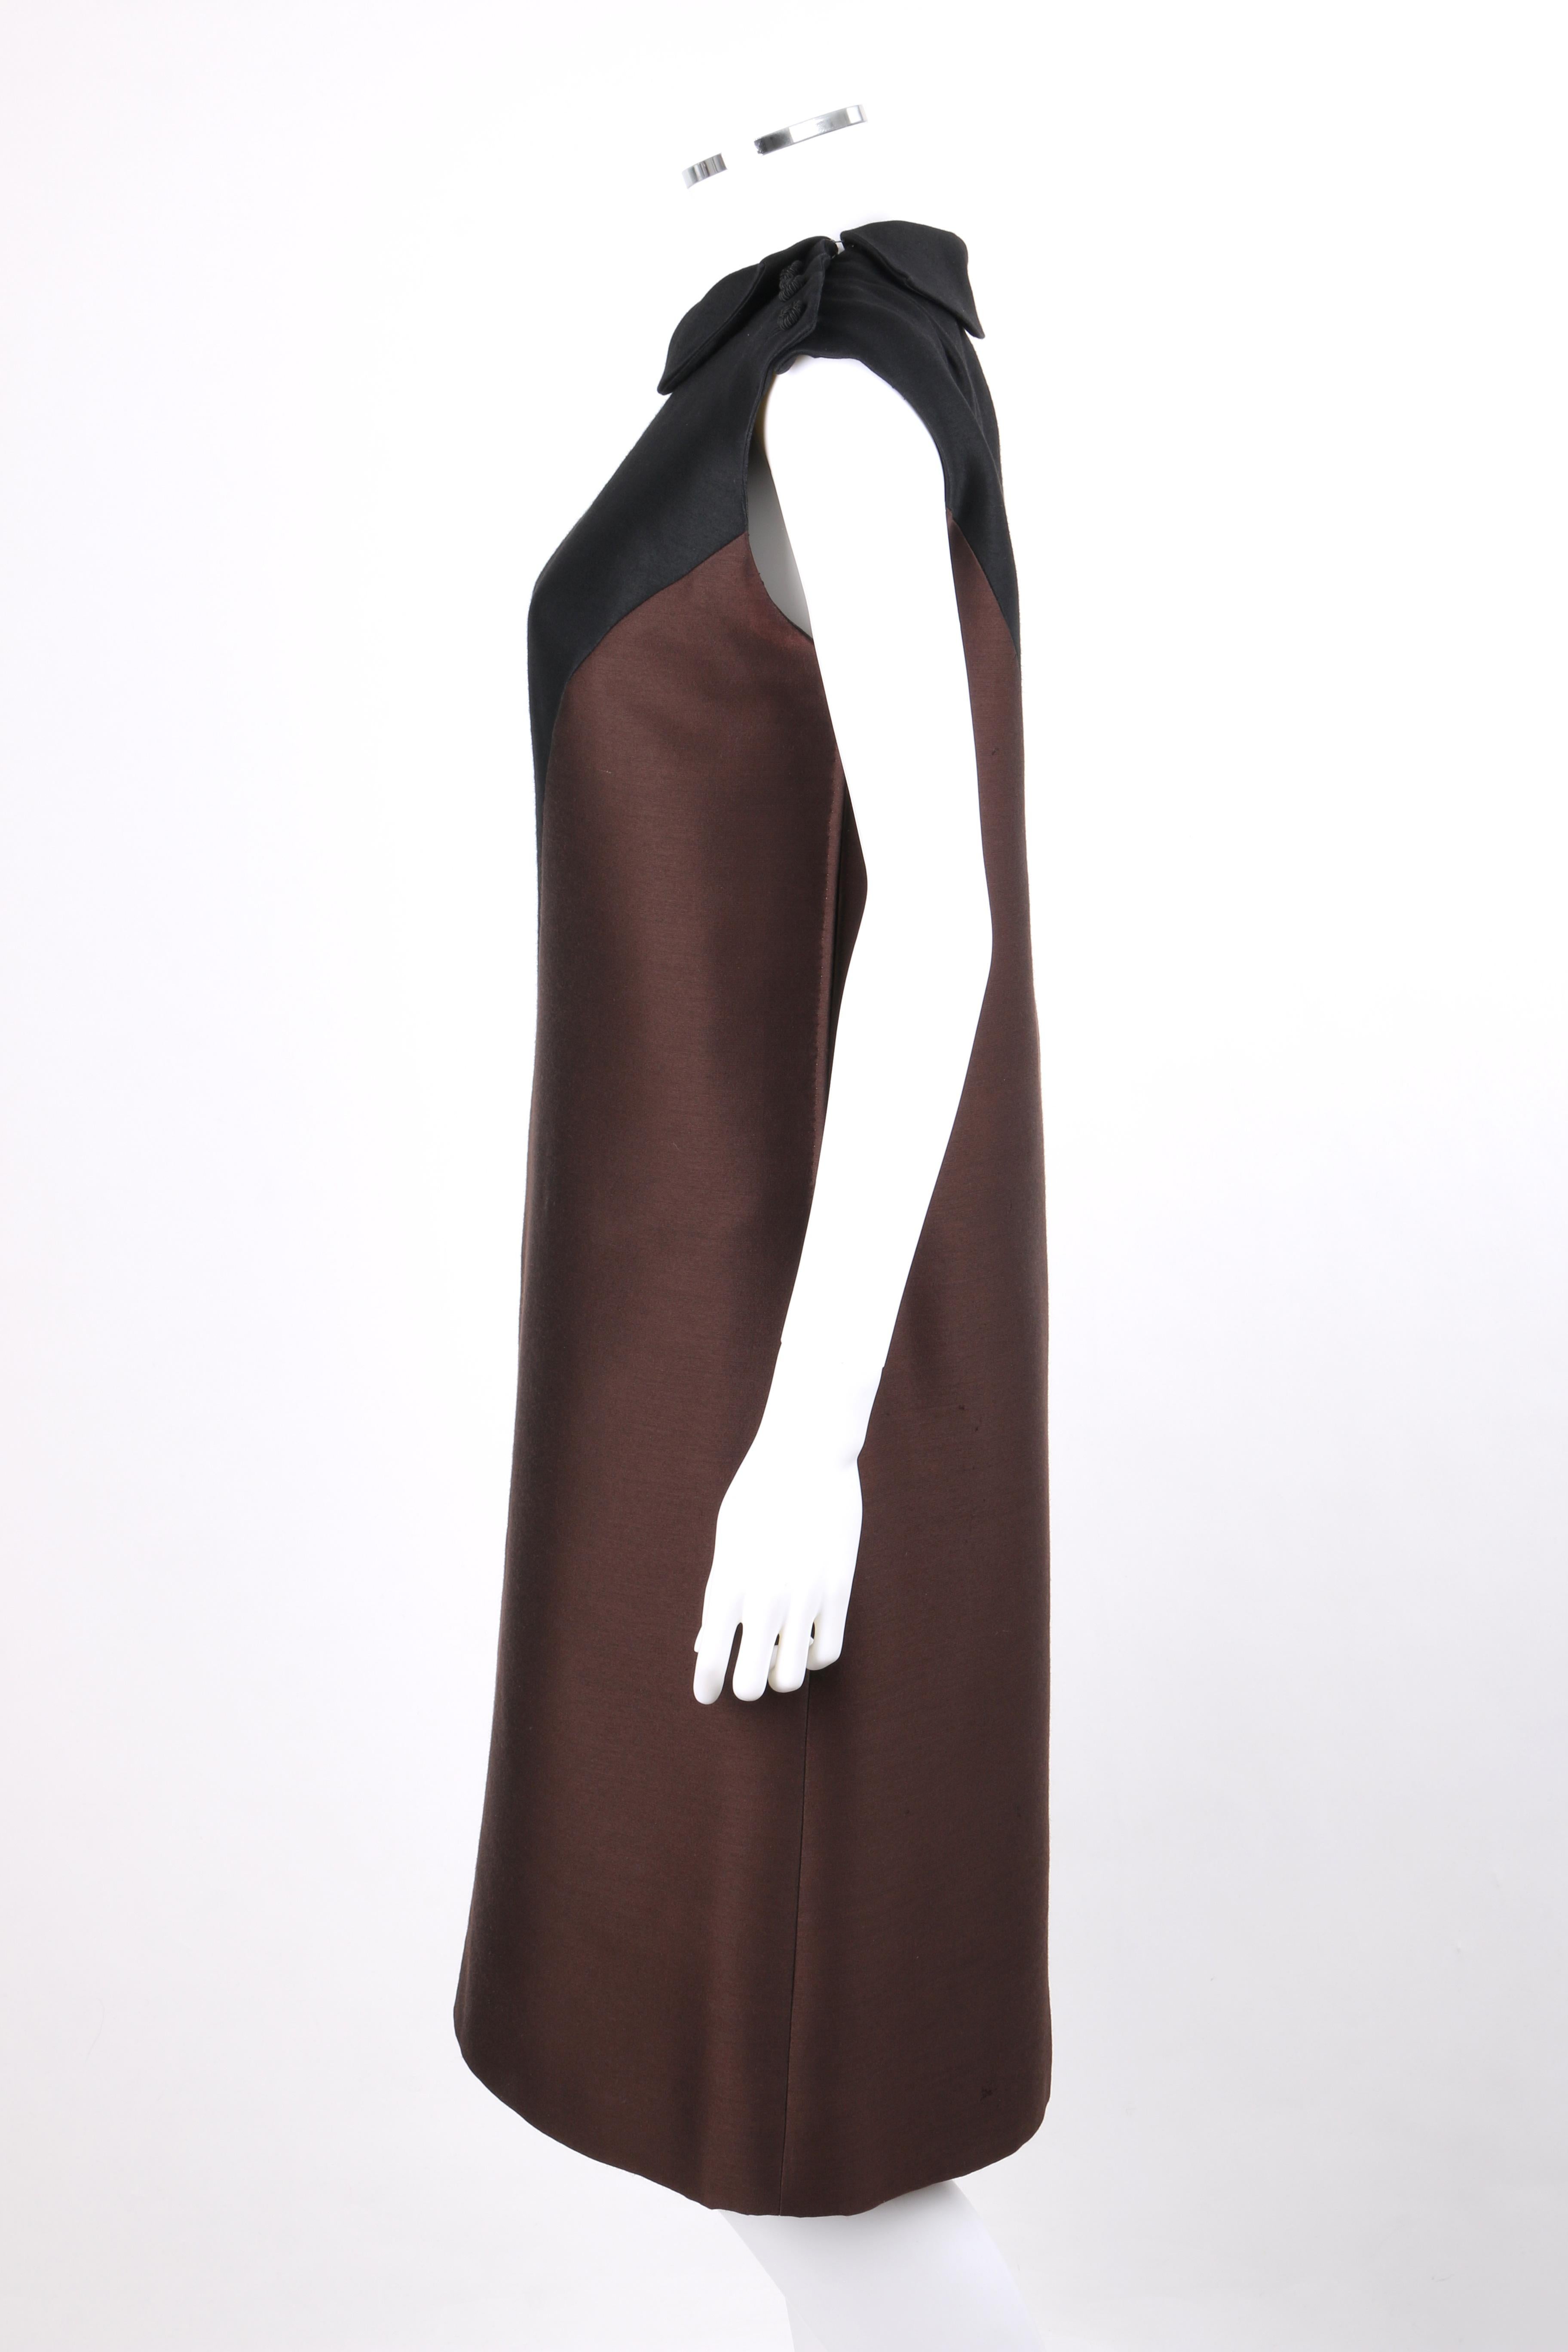 MOE NATHAN New York c.1960’s Brown Black Color Block Mod Sleeveless Shift Dress 1